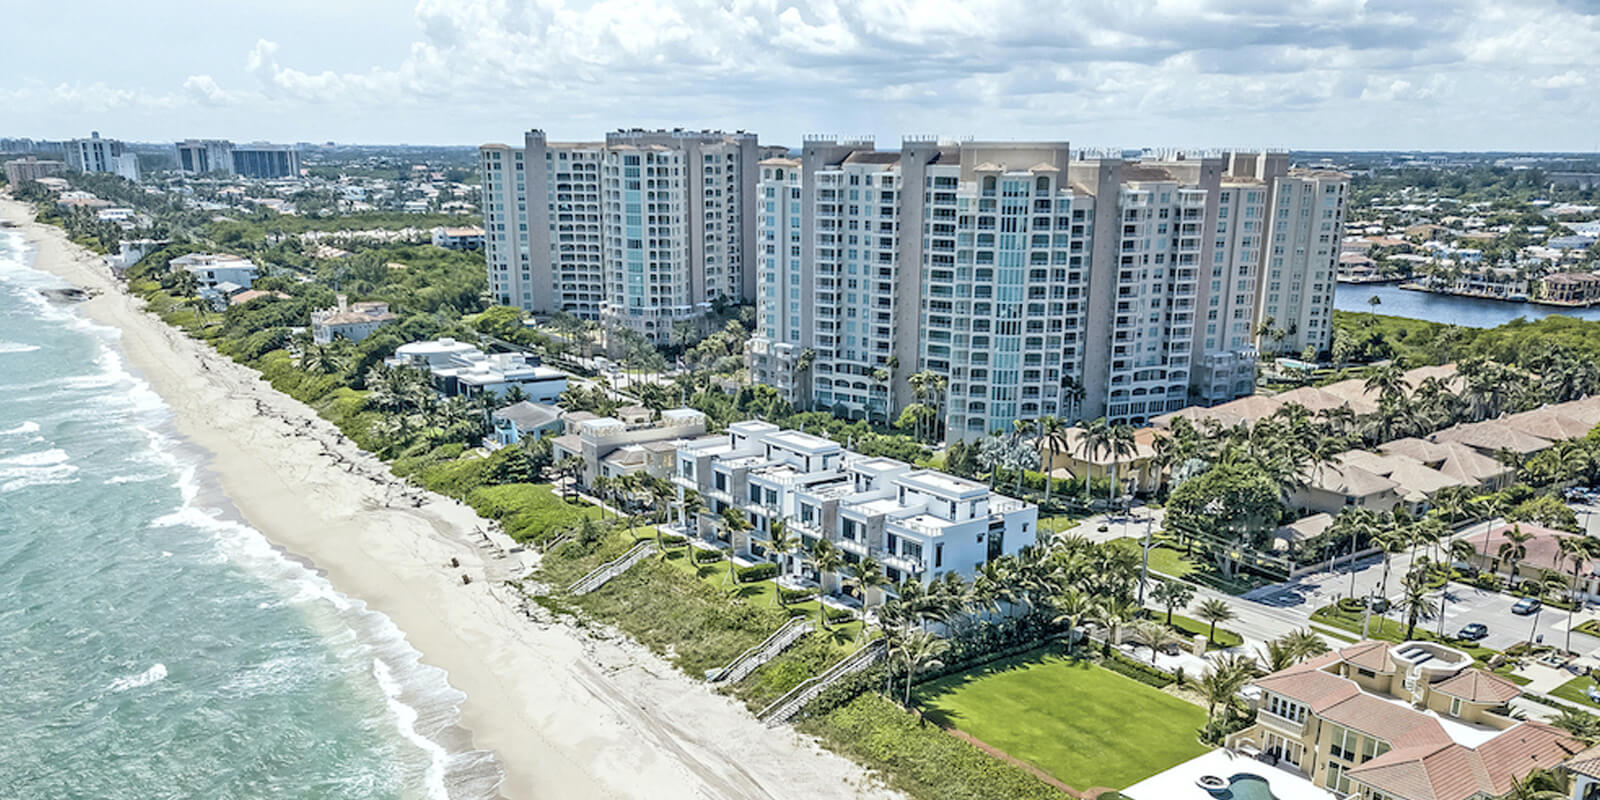 Boca Raton luxury homes, condos, and the sea shore